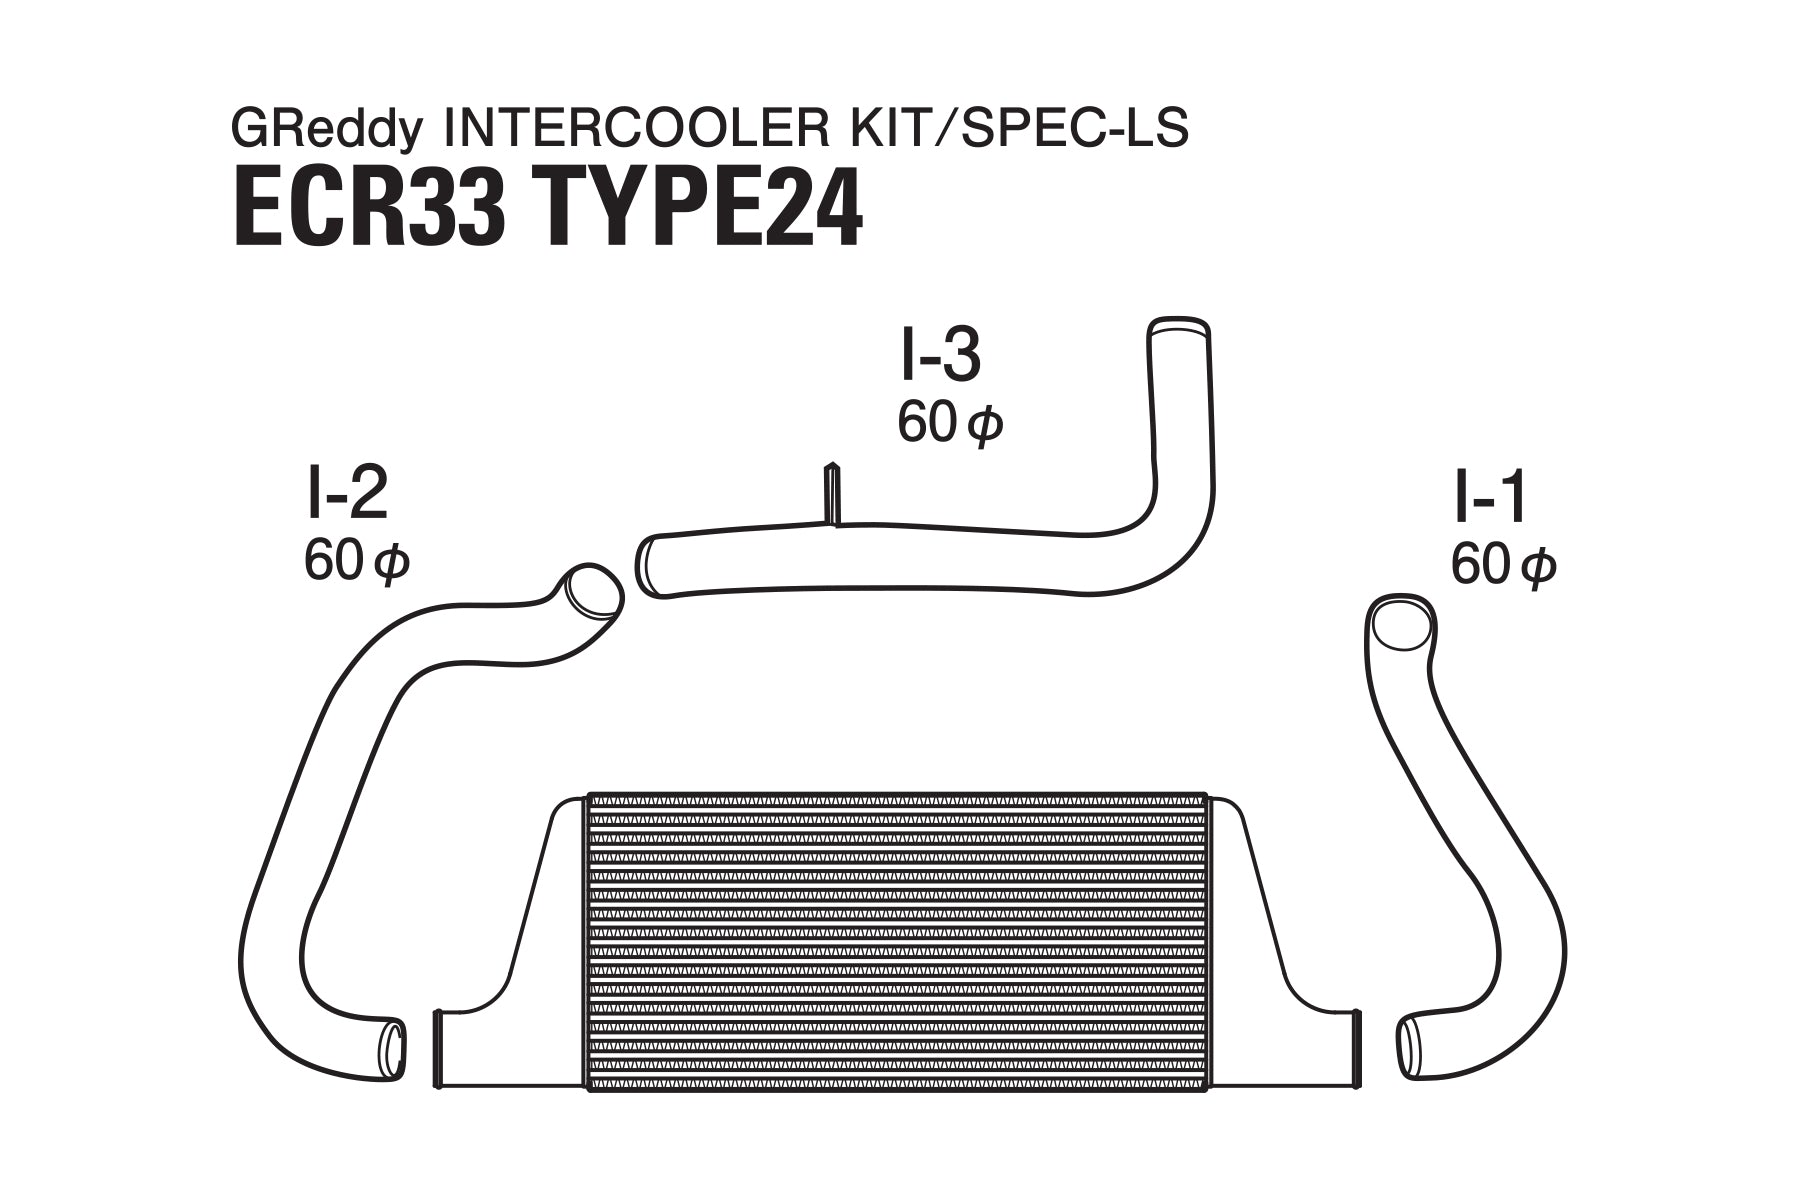 GREDDY INTERCOOLER KIT SPEC-LS T-24 ECR33 - (12020482)